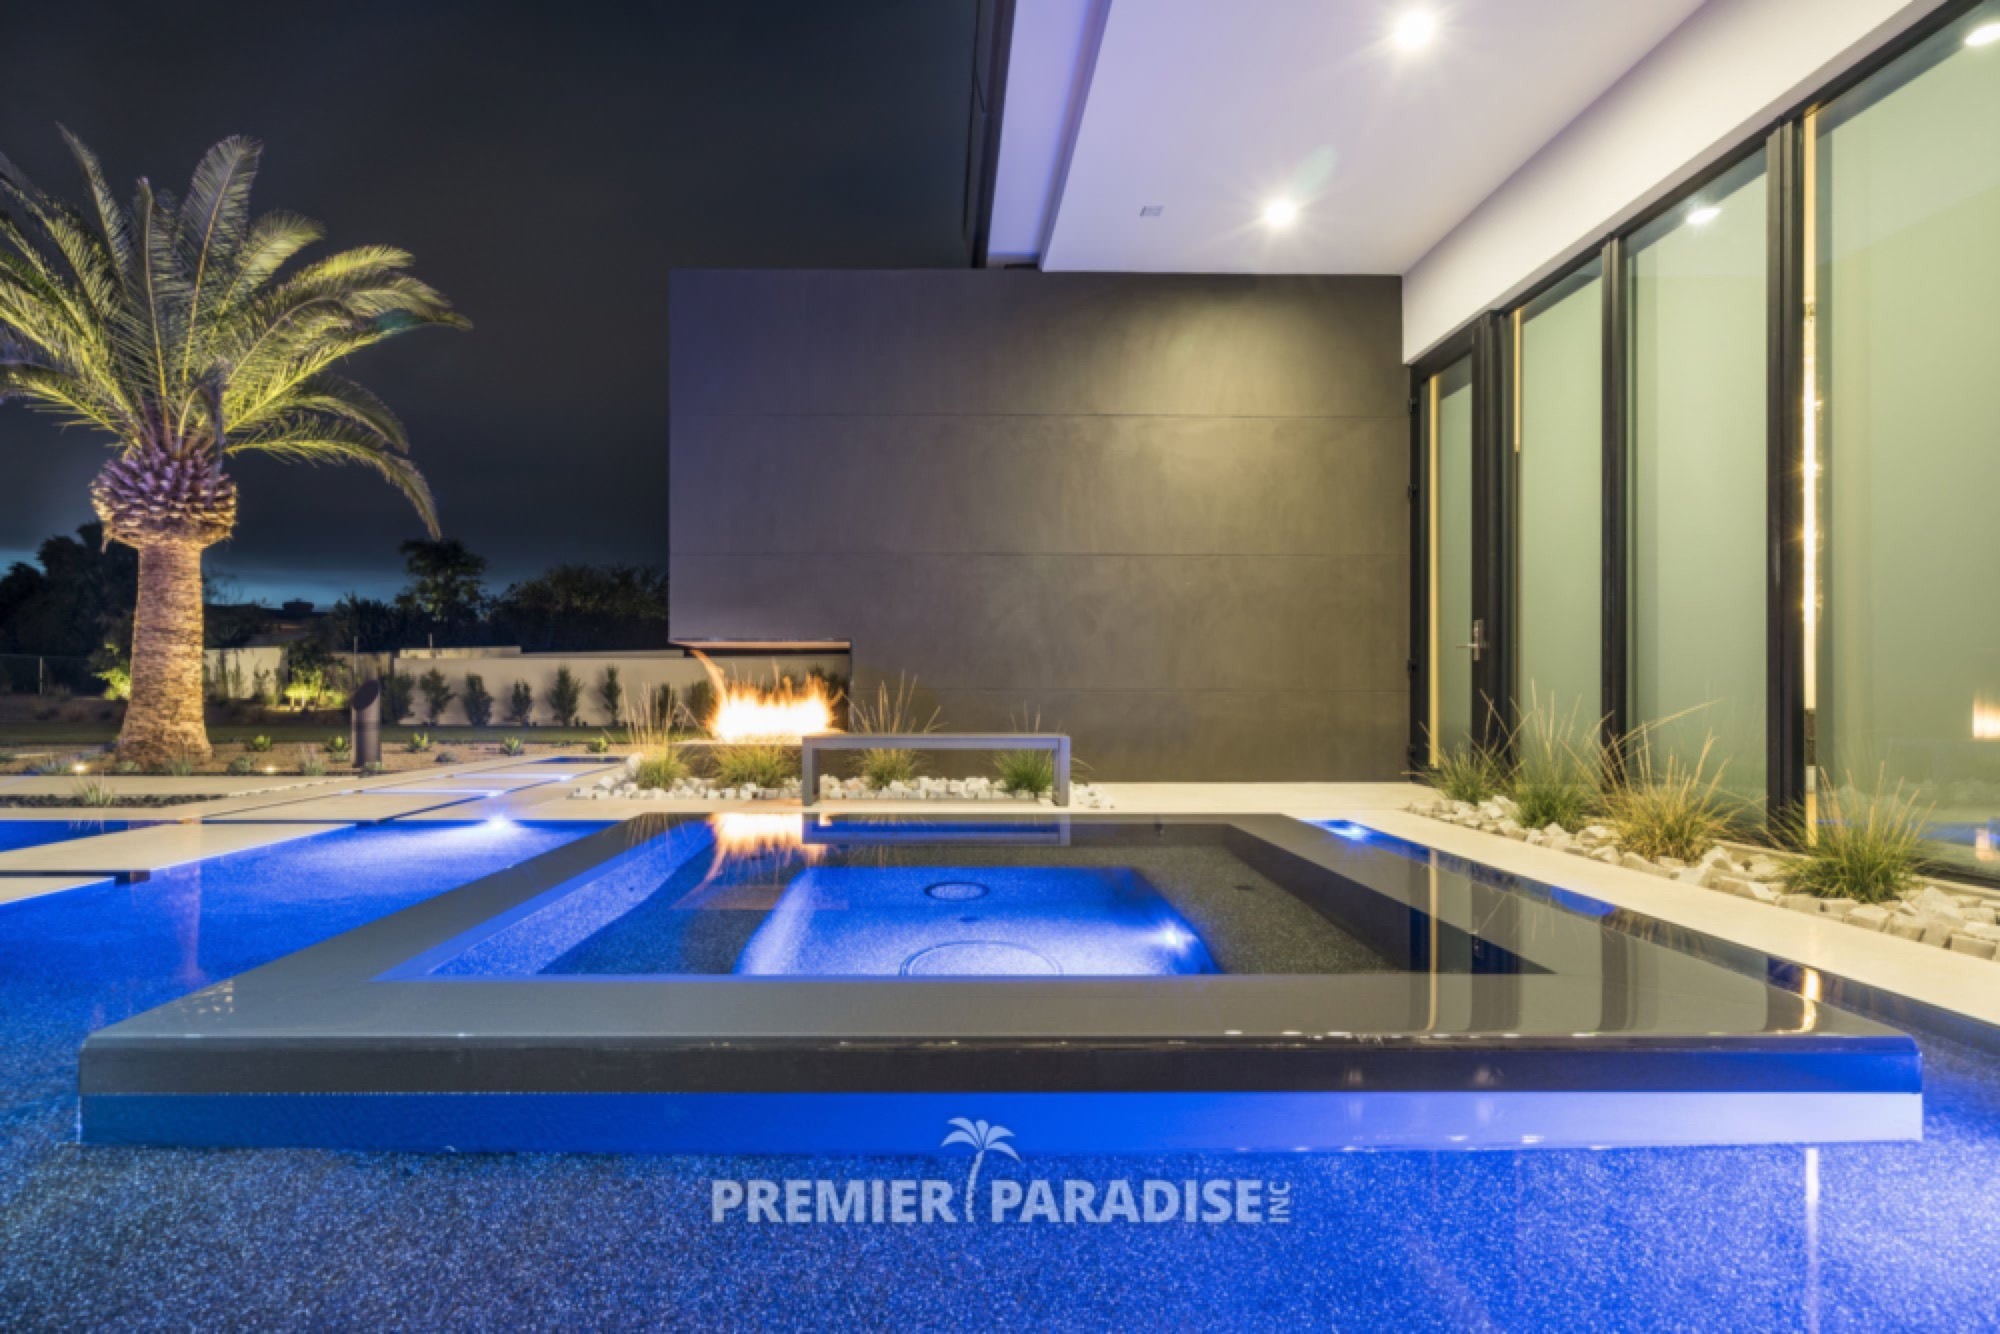 infinity edge pool design custom pool builder arizona premier paradise inc 9 watermarked